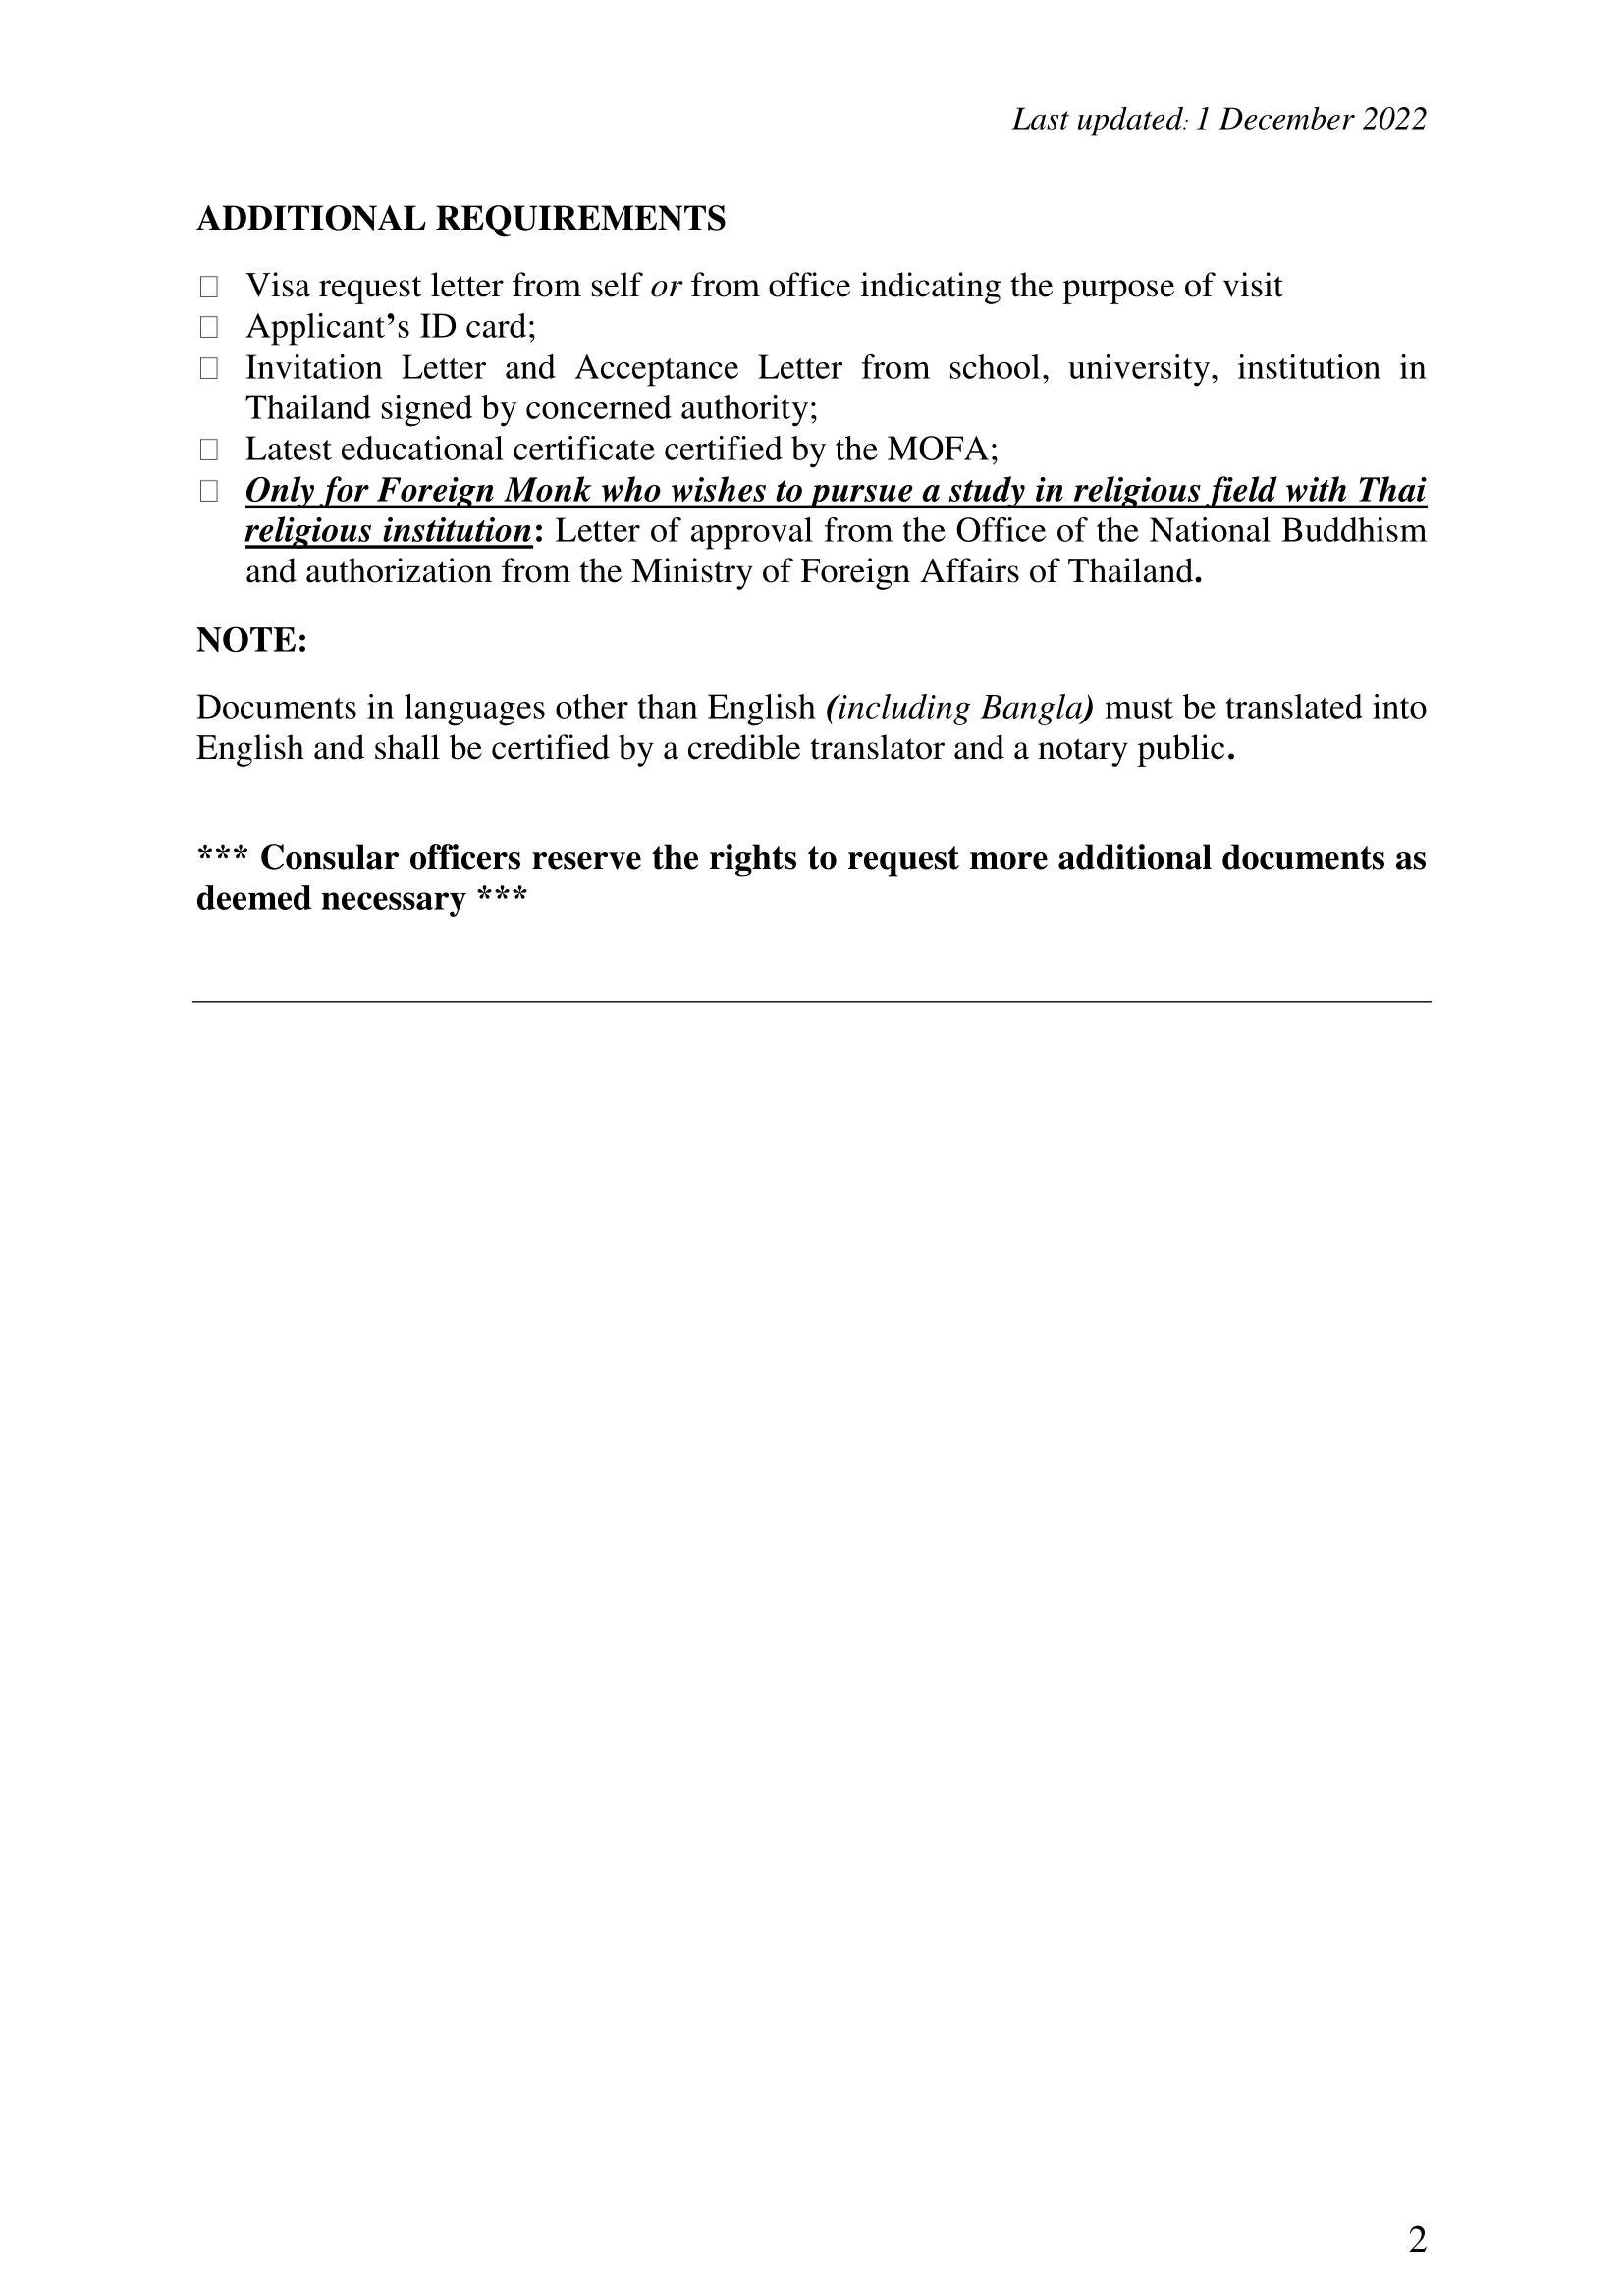 Non-Immigrant_Visa_(ED)_1_December_2022-2